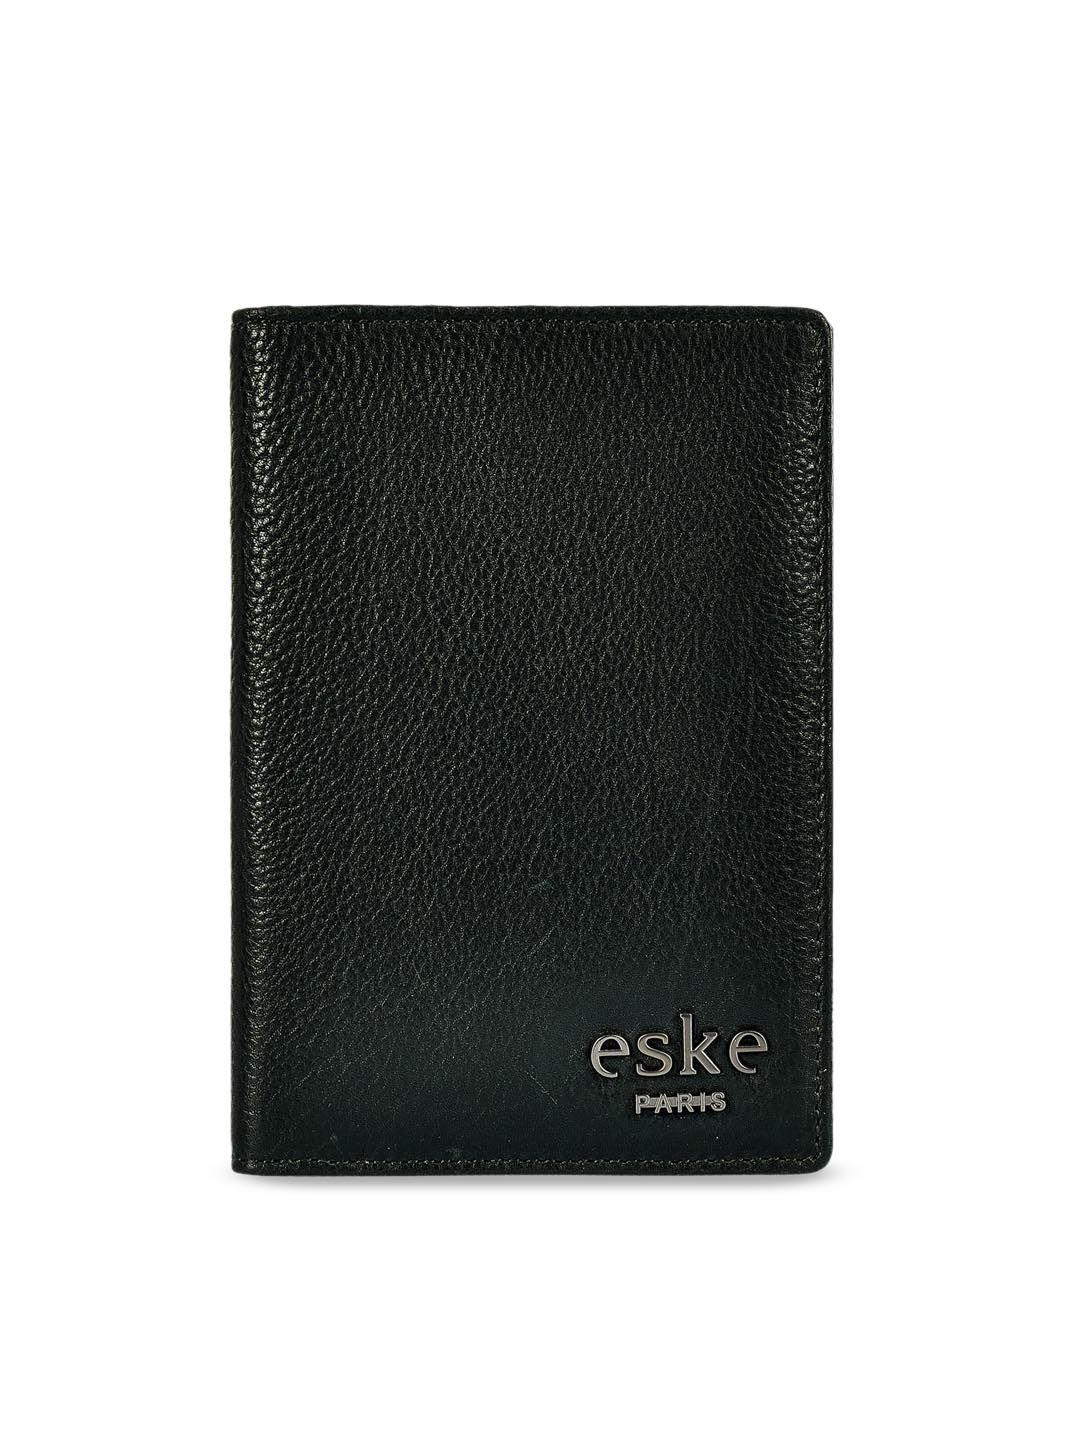 Eske Unisex Green Textured Leather Toledo Passport Cover Price in India